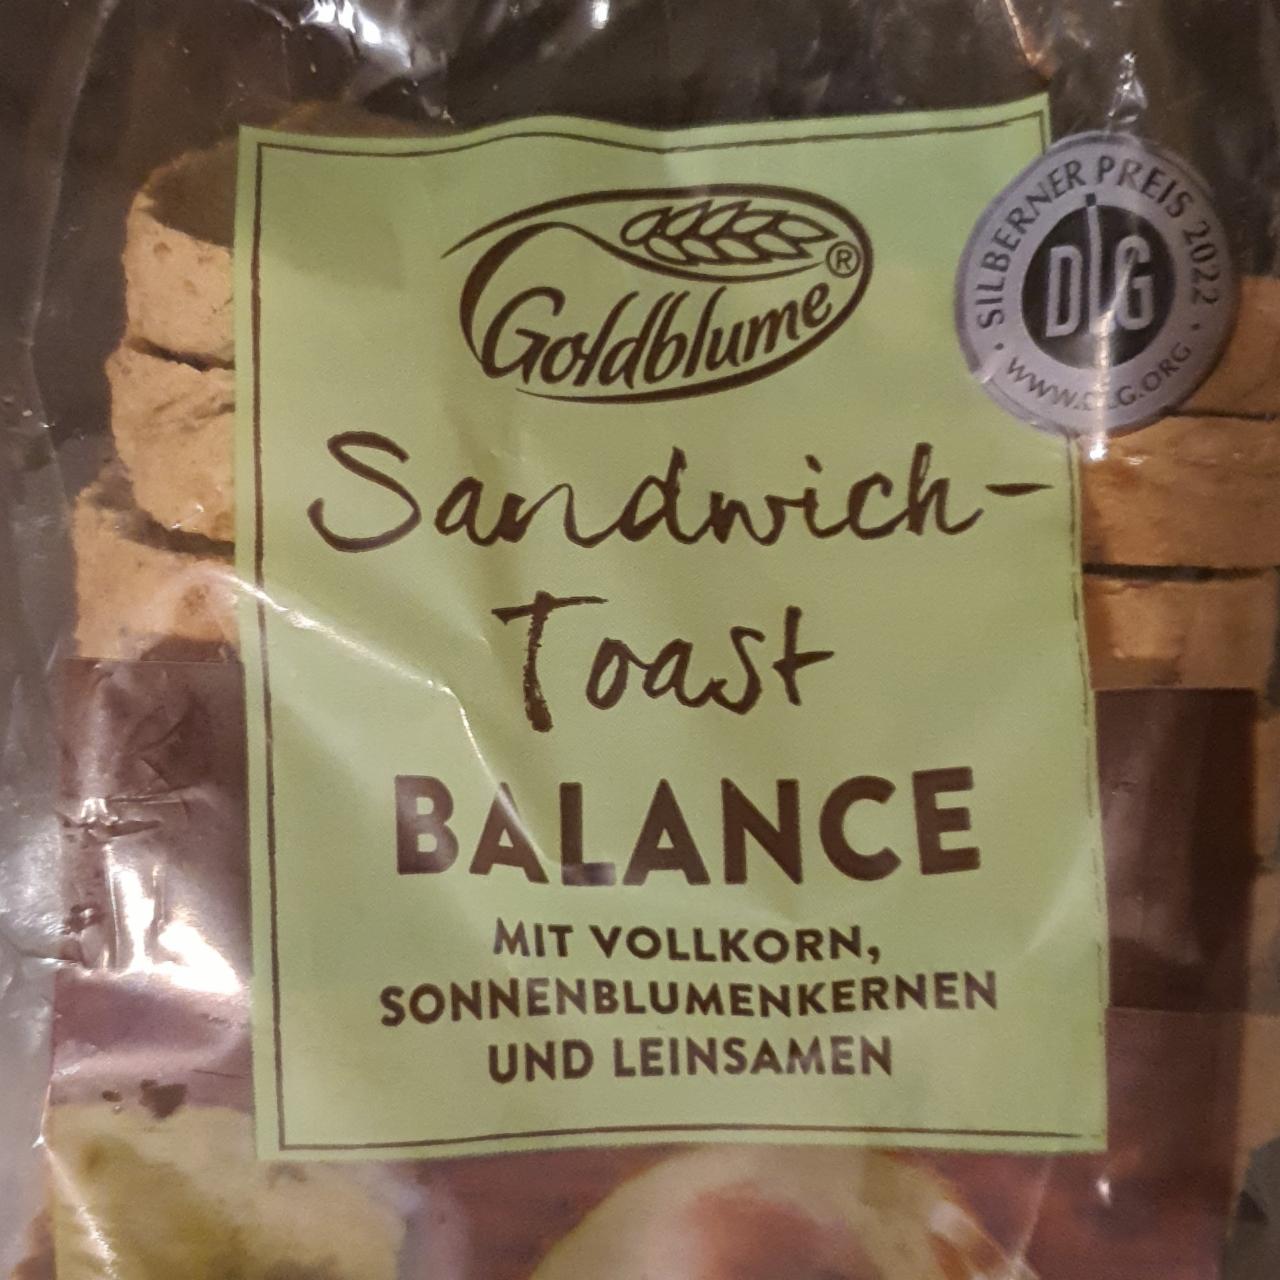 Fotografie - Sandwich-Toast Balance Goldblume